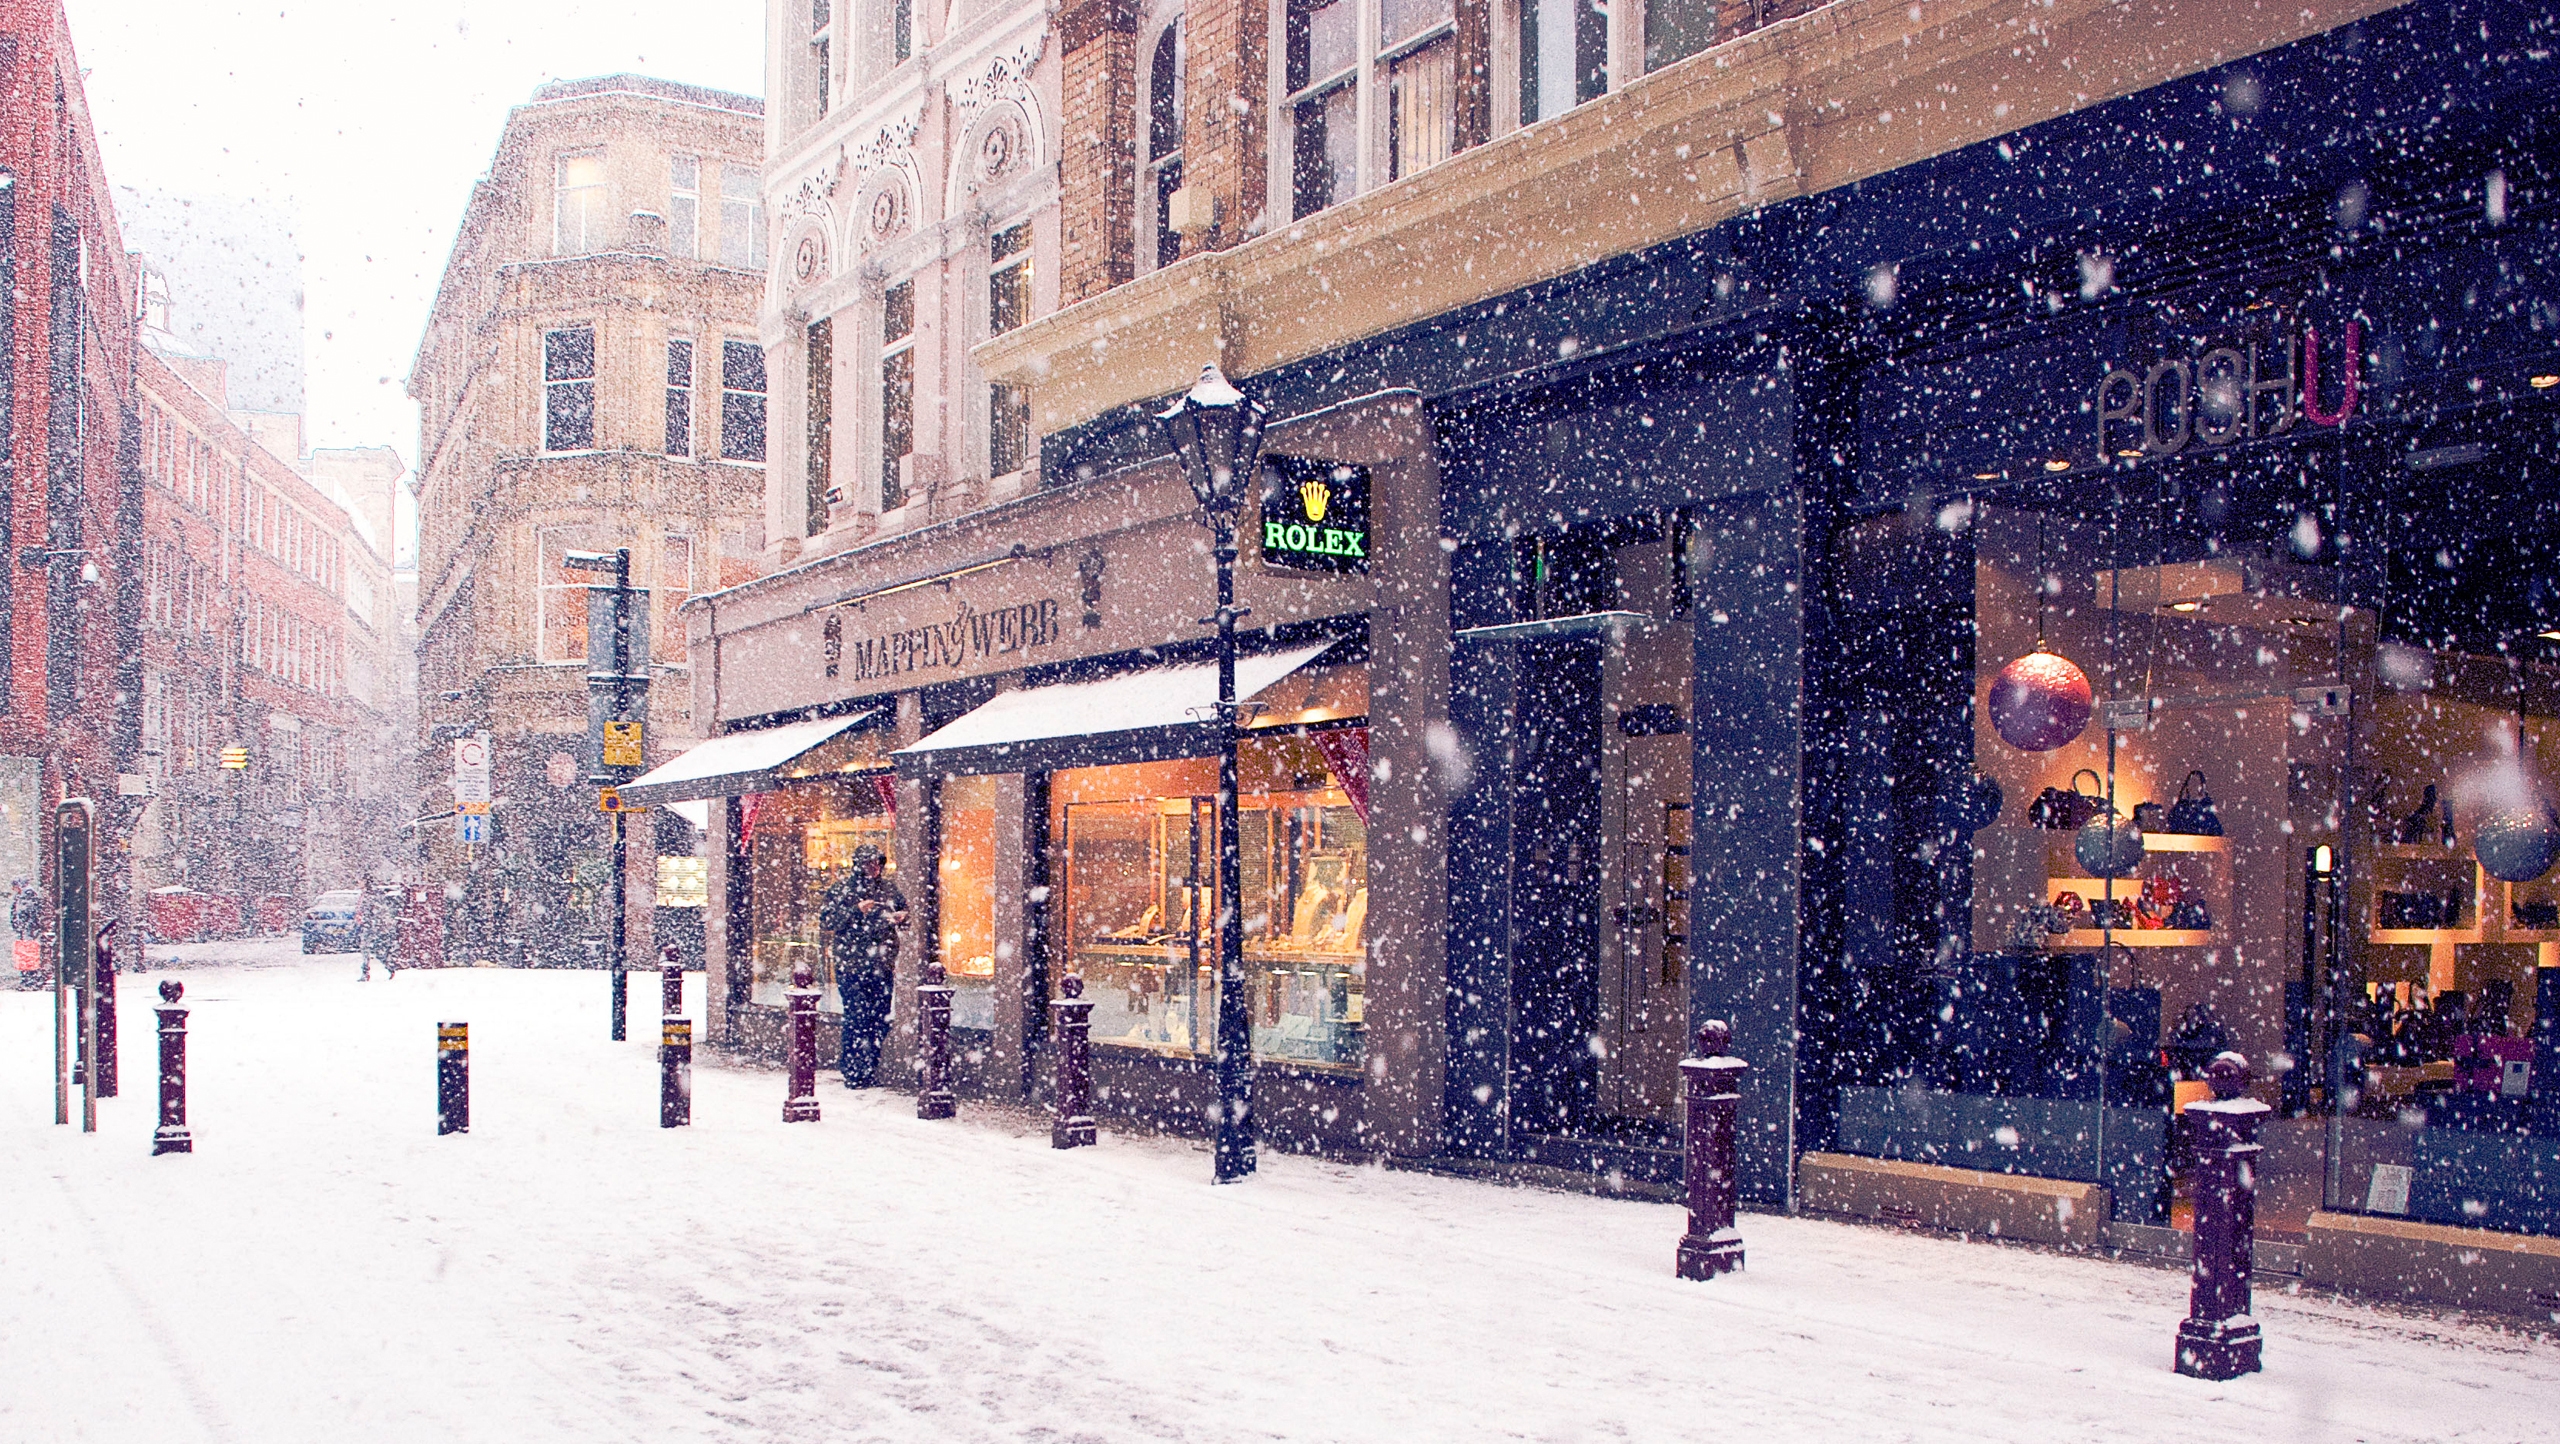 europe, winter, cities, city, snow, street, shops